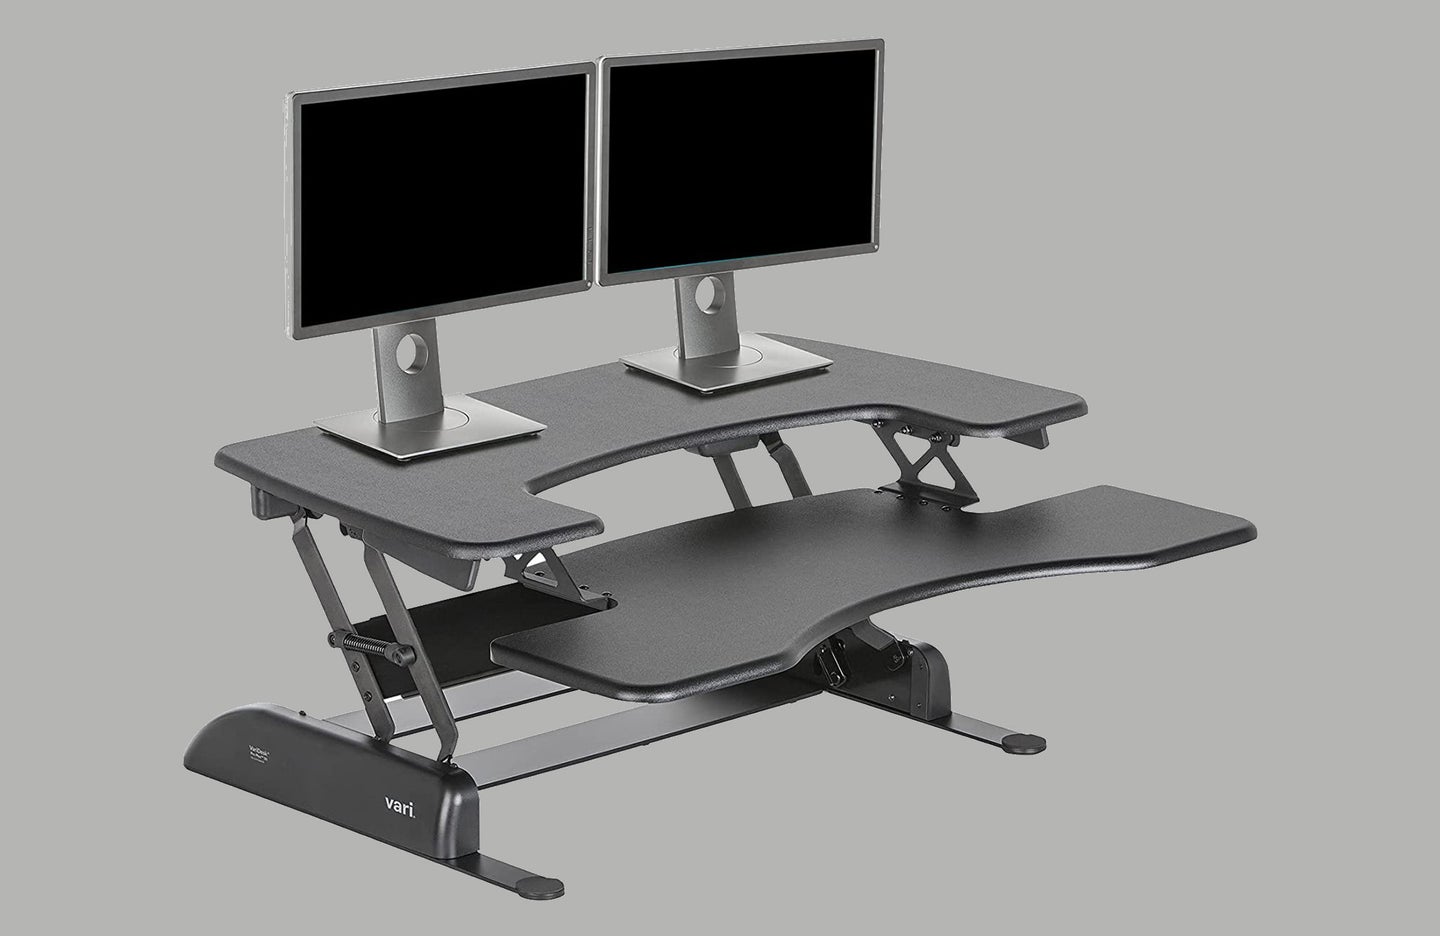 The best desks for dual monitors